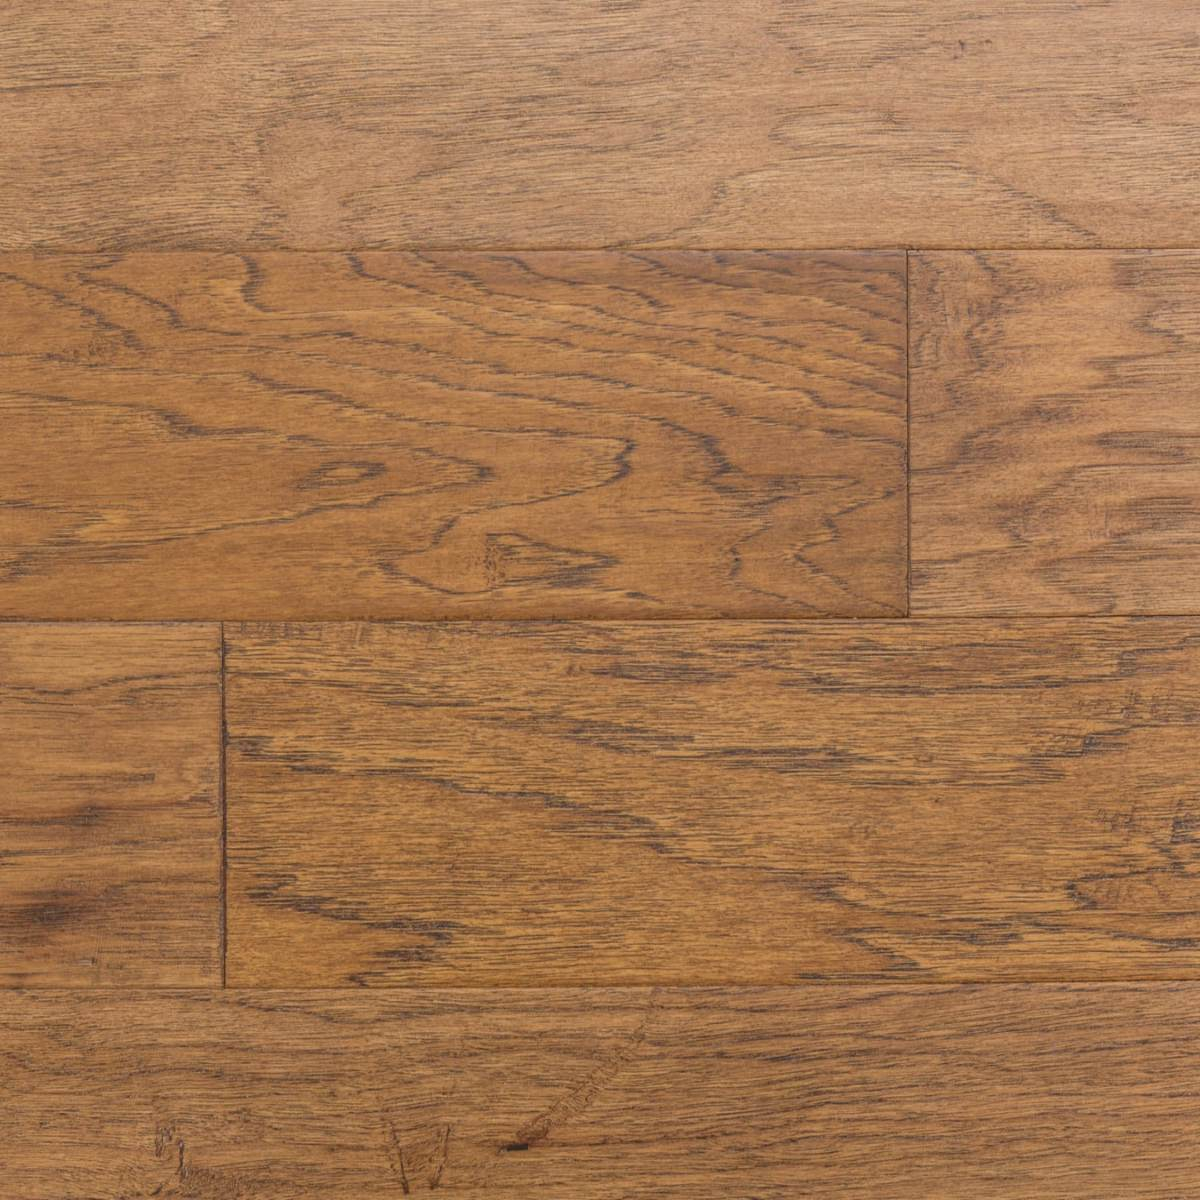 Engineered Ambiance Hickory Earth T G Hardwood Flooring